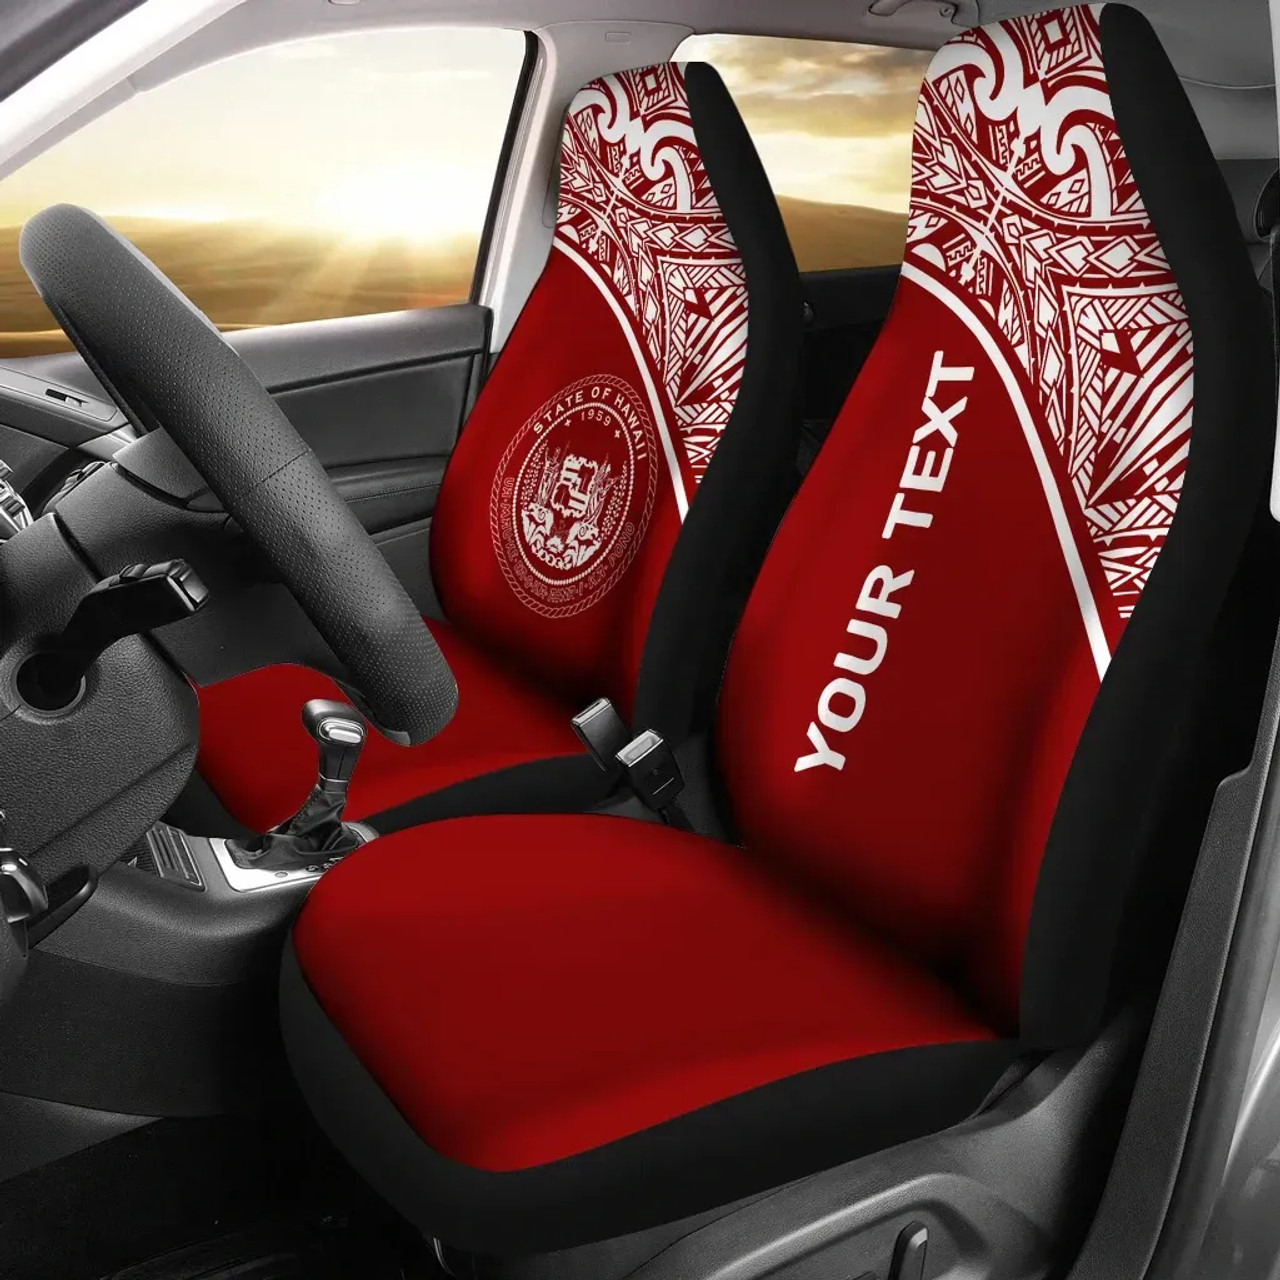 Hawaii Custom Personalised Car Seat Covers - Hawaii Seal Polynesian Red Curve